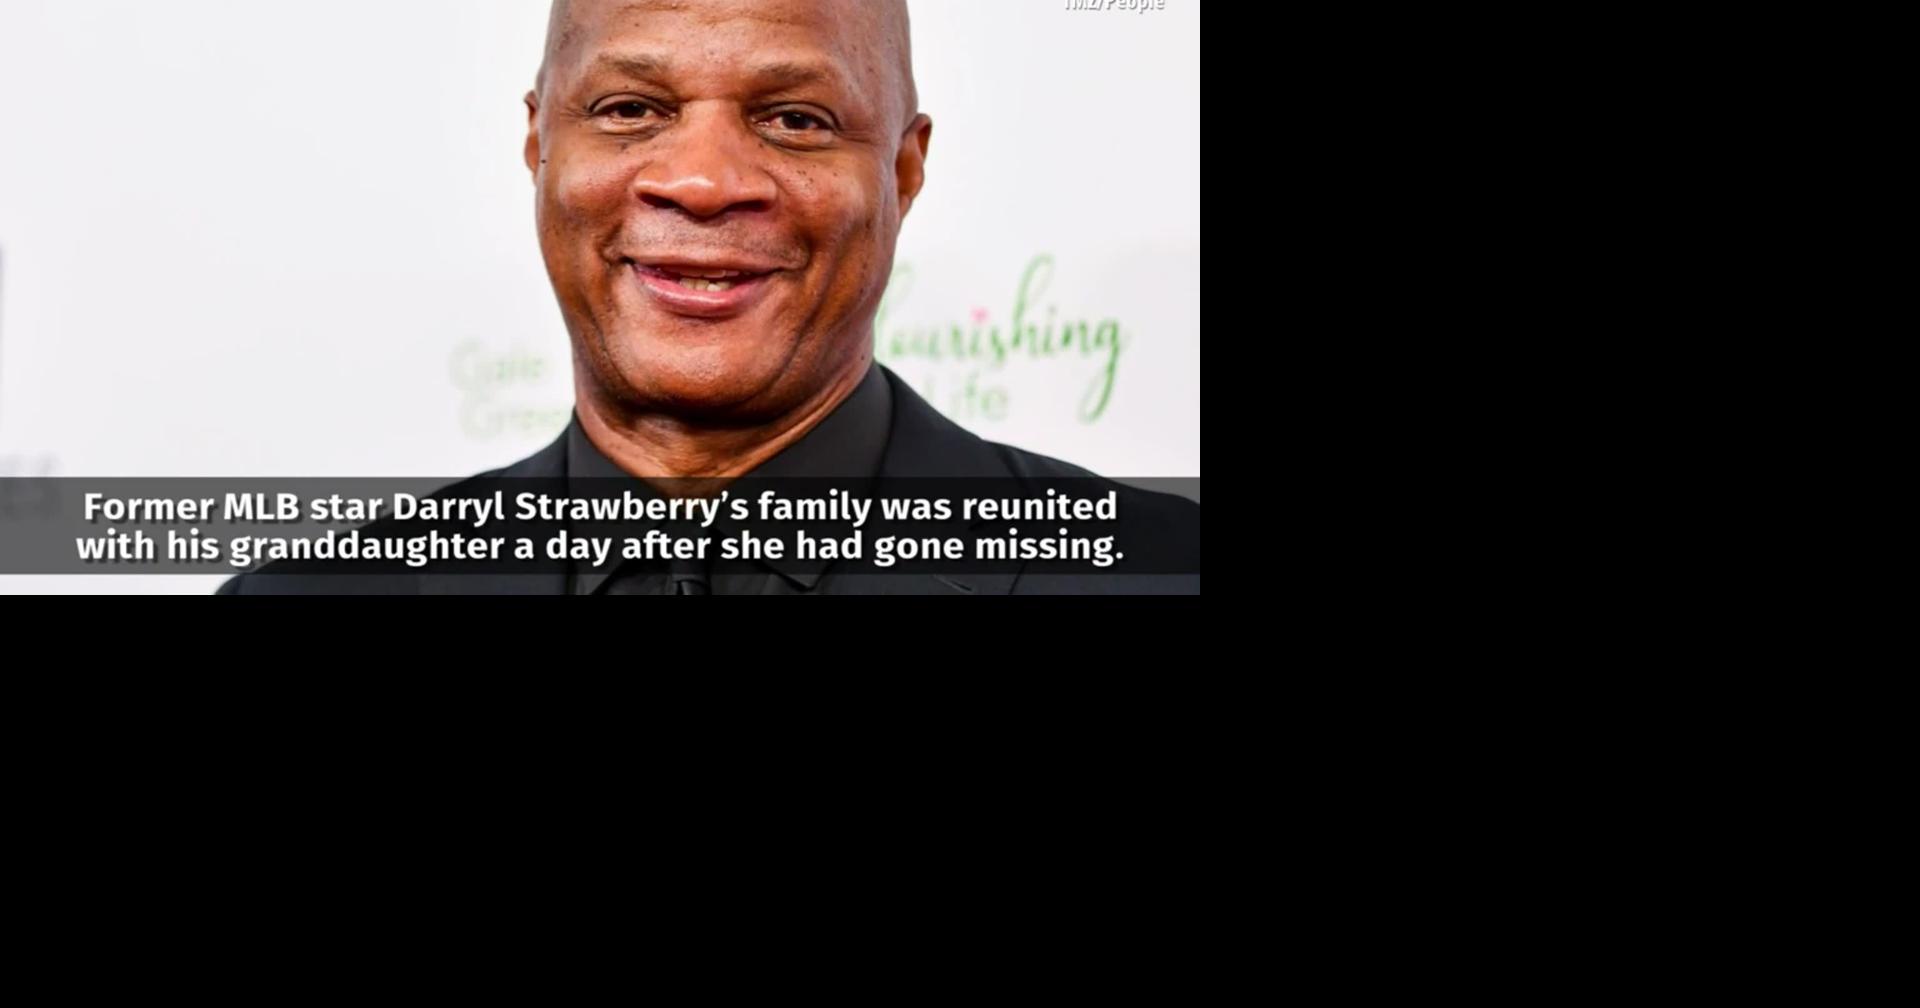 Former MLB Star Darryl Strawberry's Missing 14-Year-Old